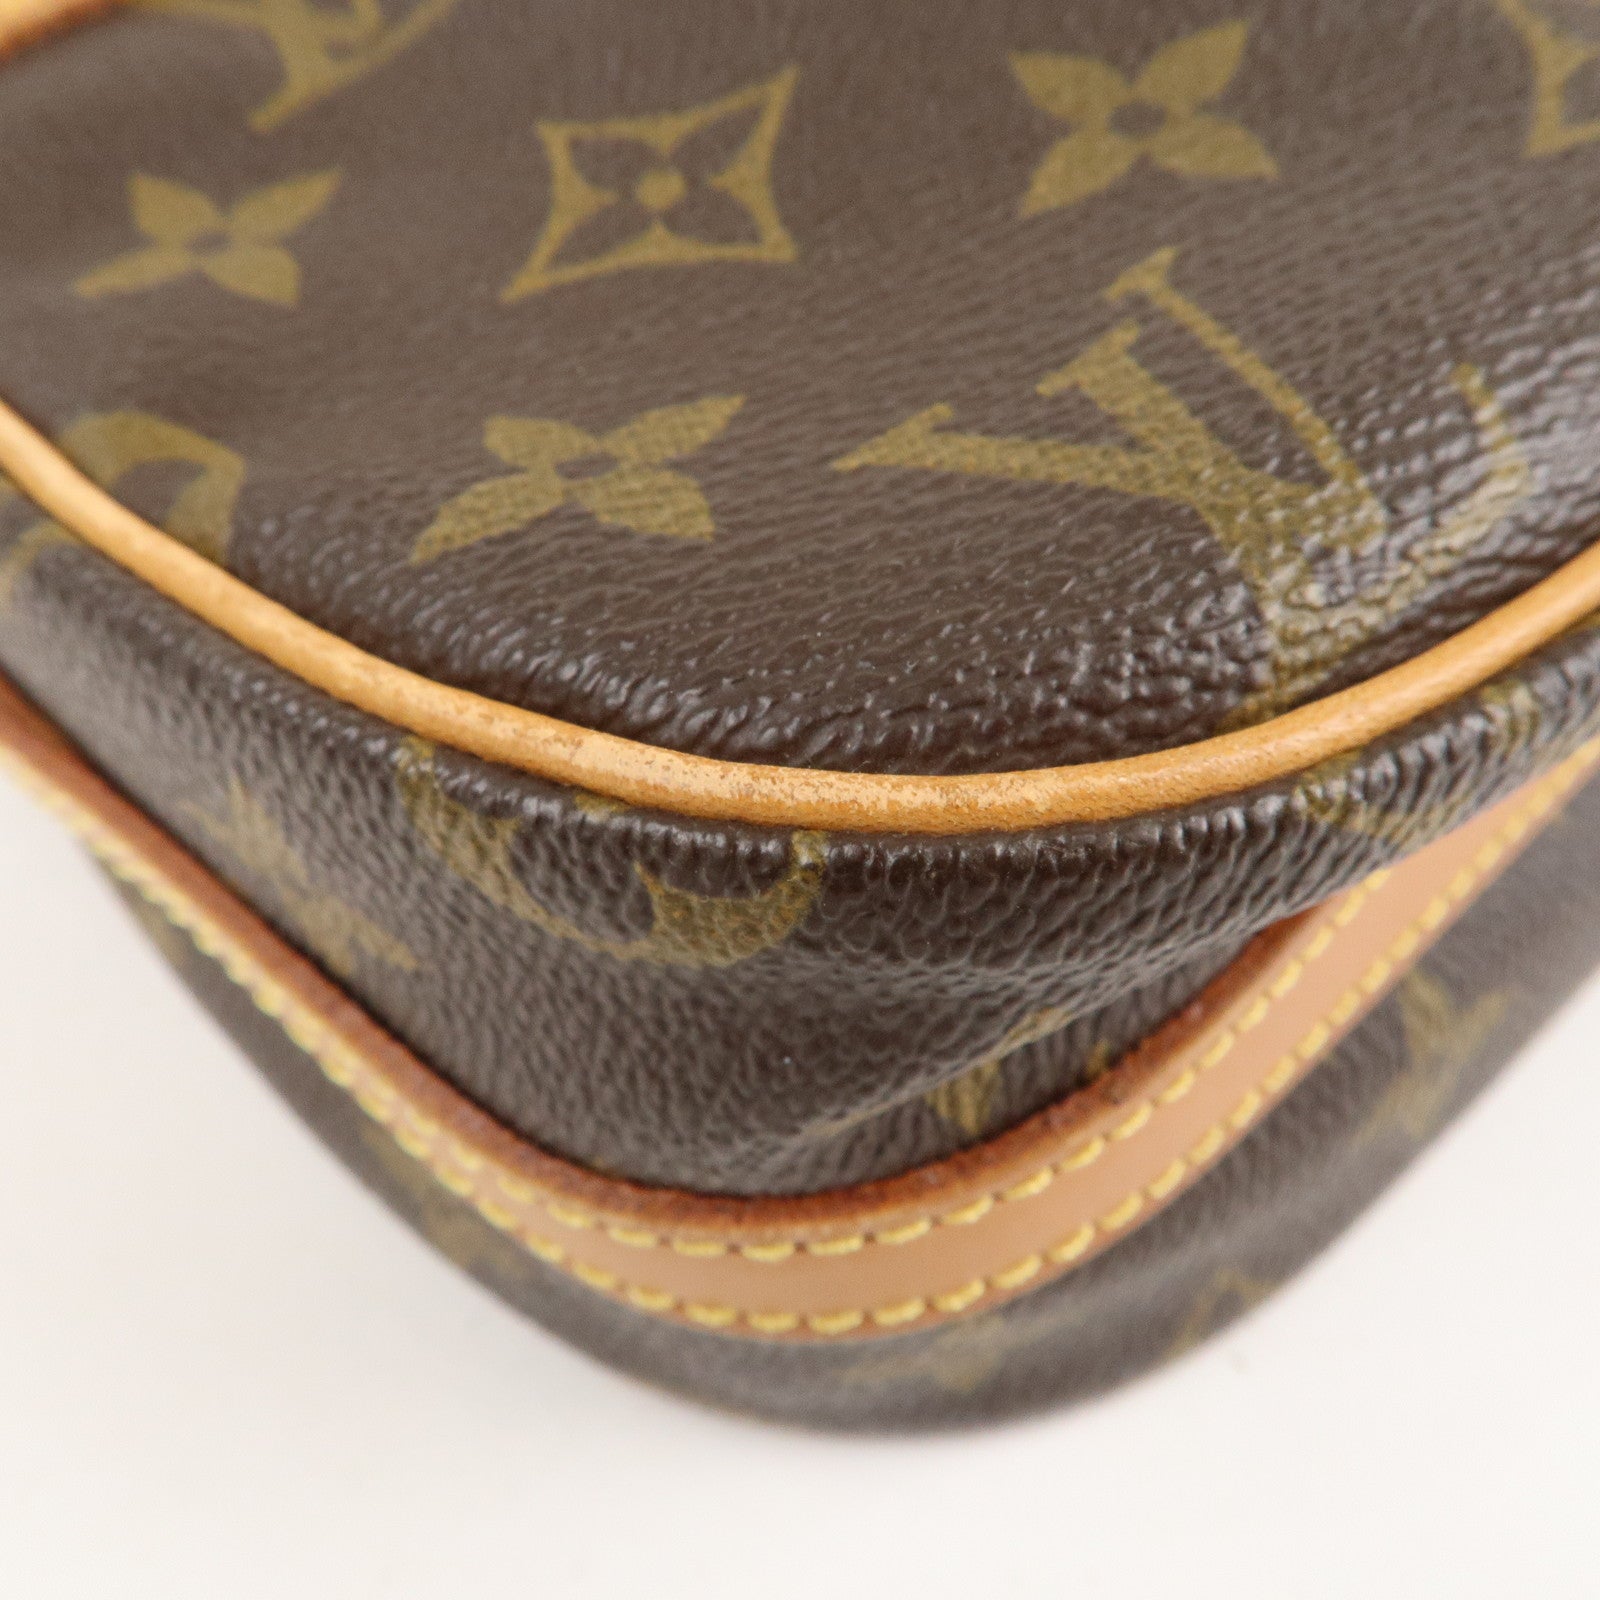 Preloved Authentic Louis Vuitton Monogram Senlis Shoulder Cross Body Bag  TH0952